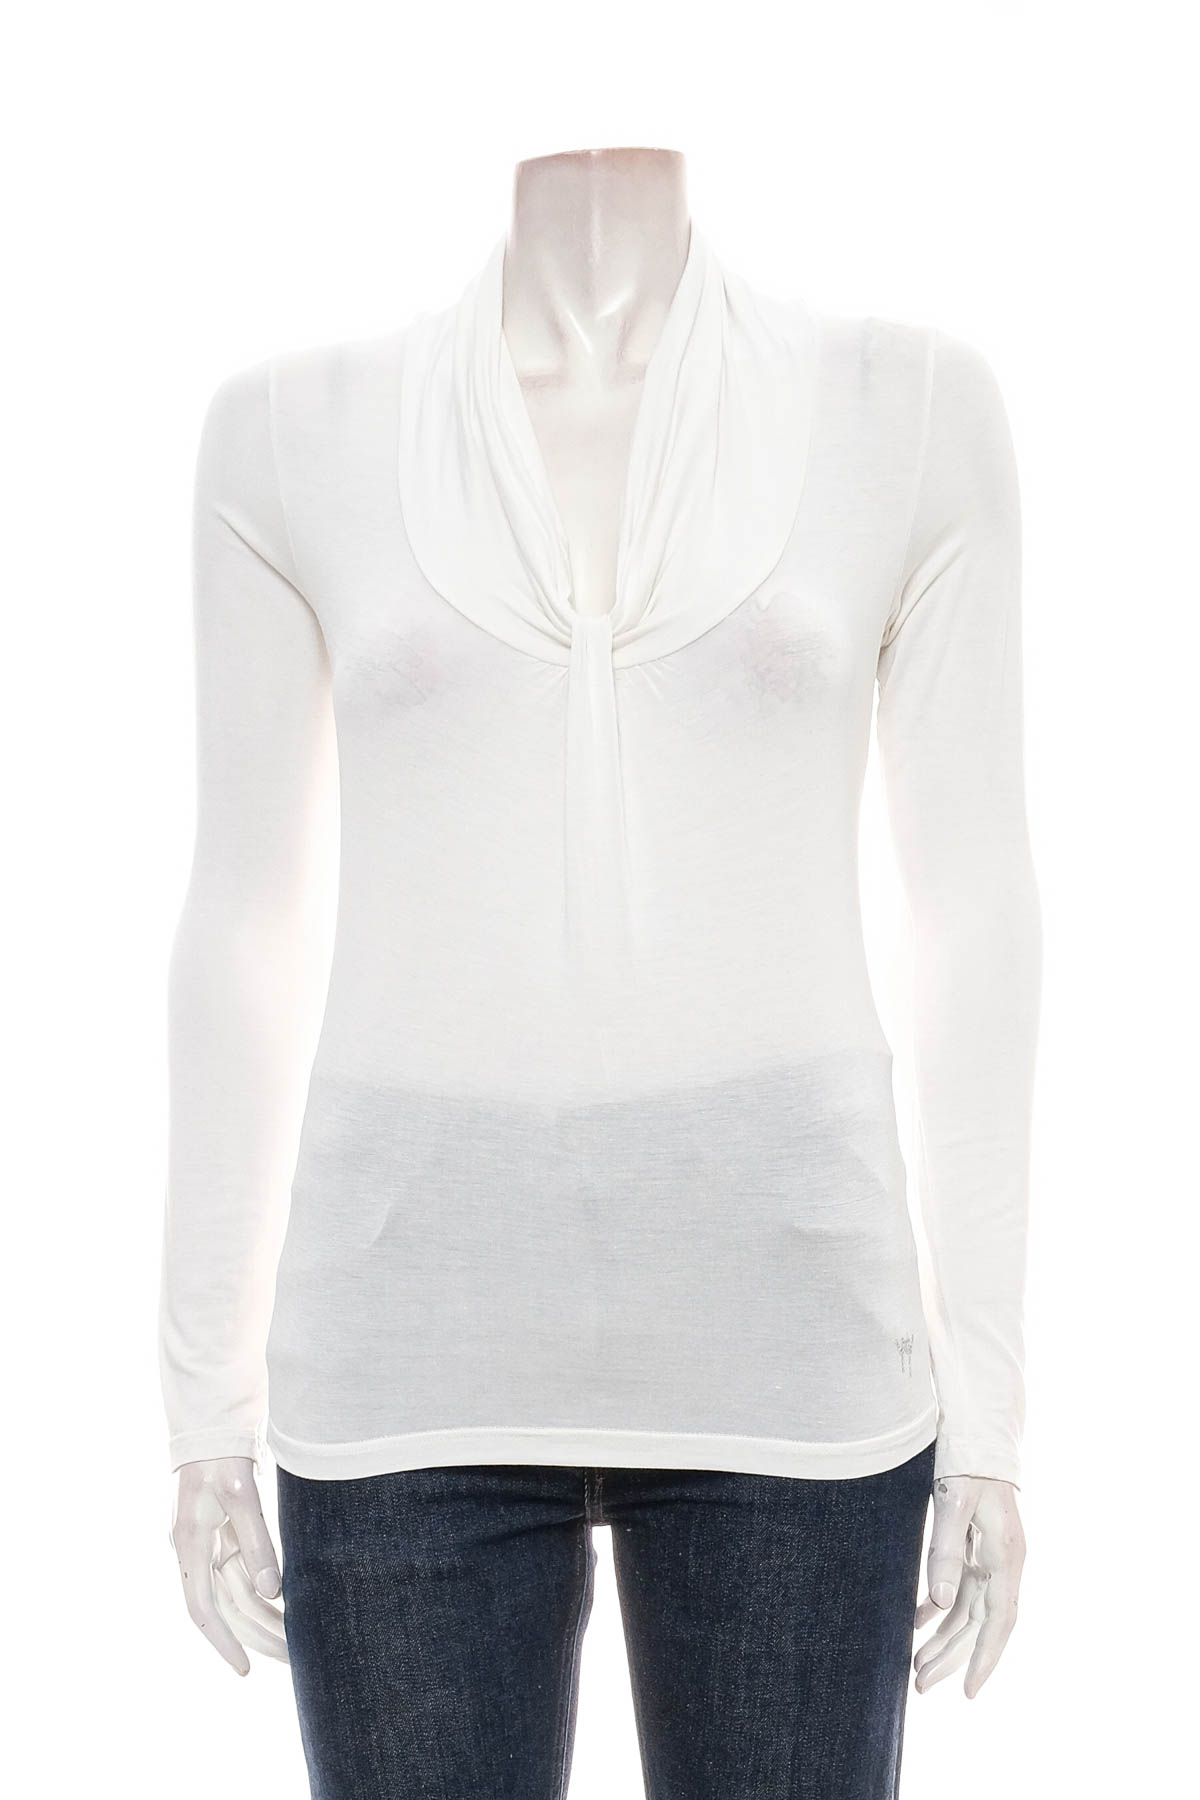 Women's blouse - Primo Emporio - 0